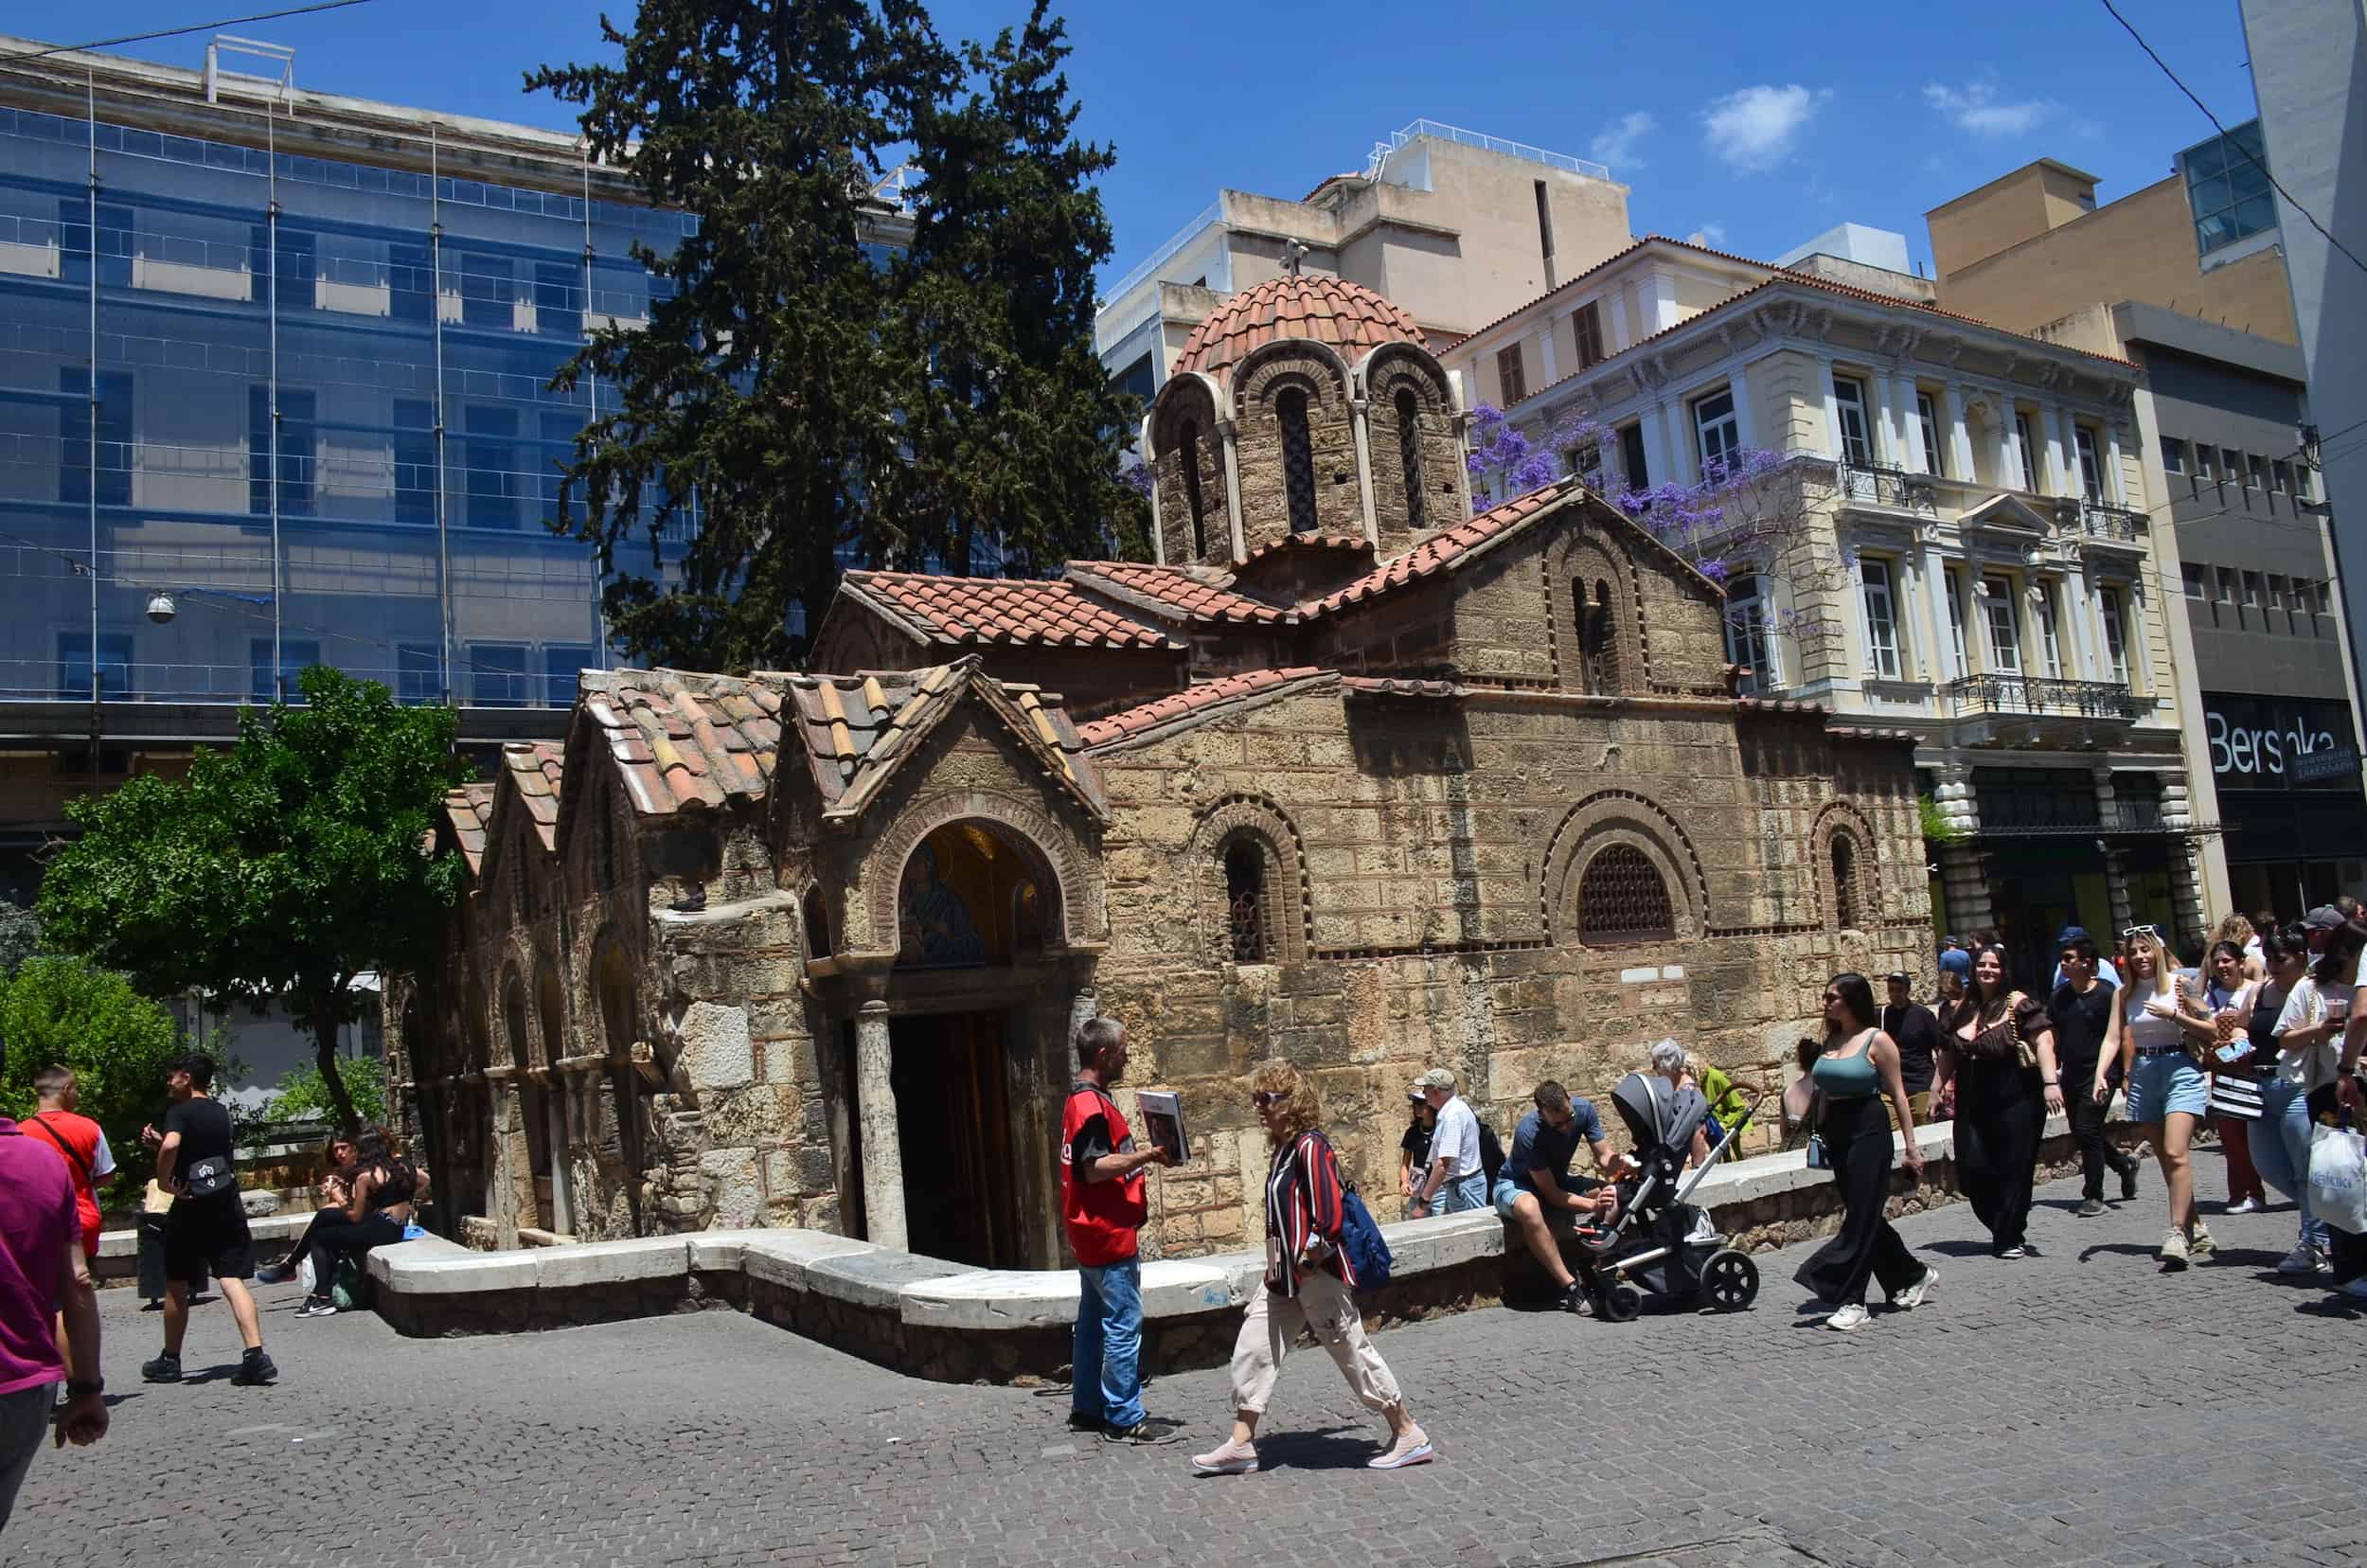 Kapnikarea in Athens, Greece